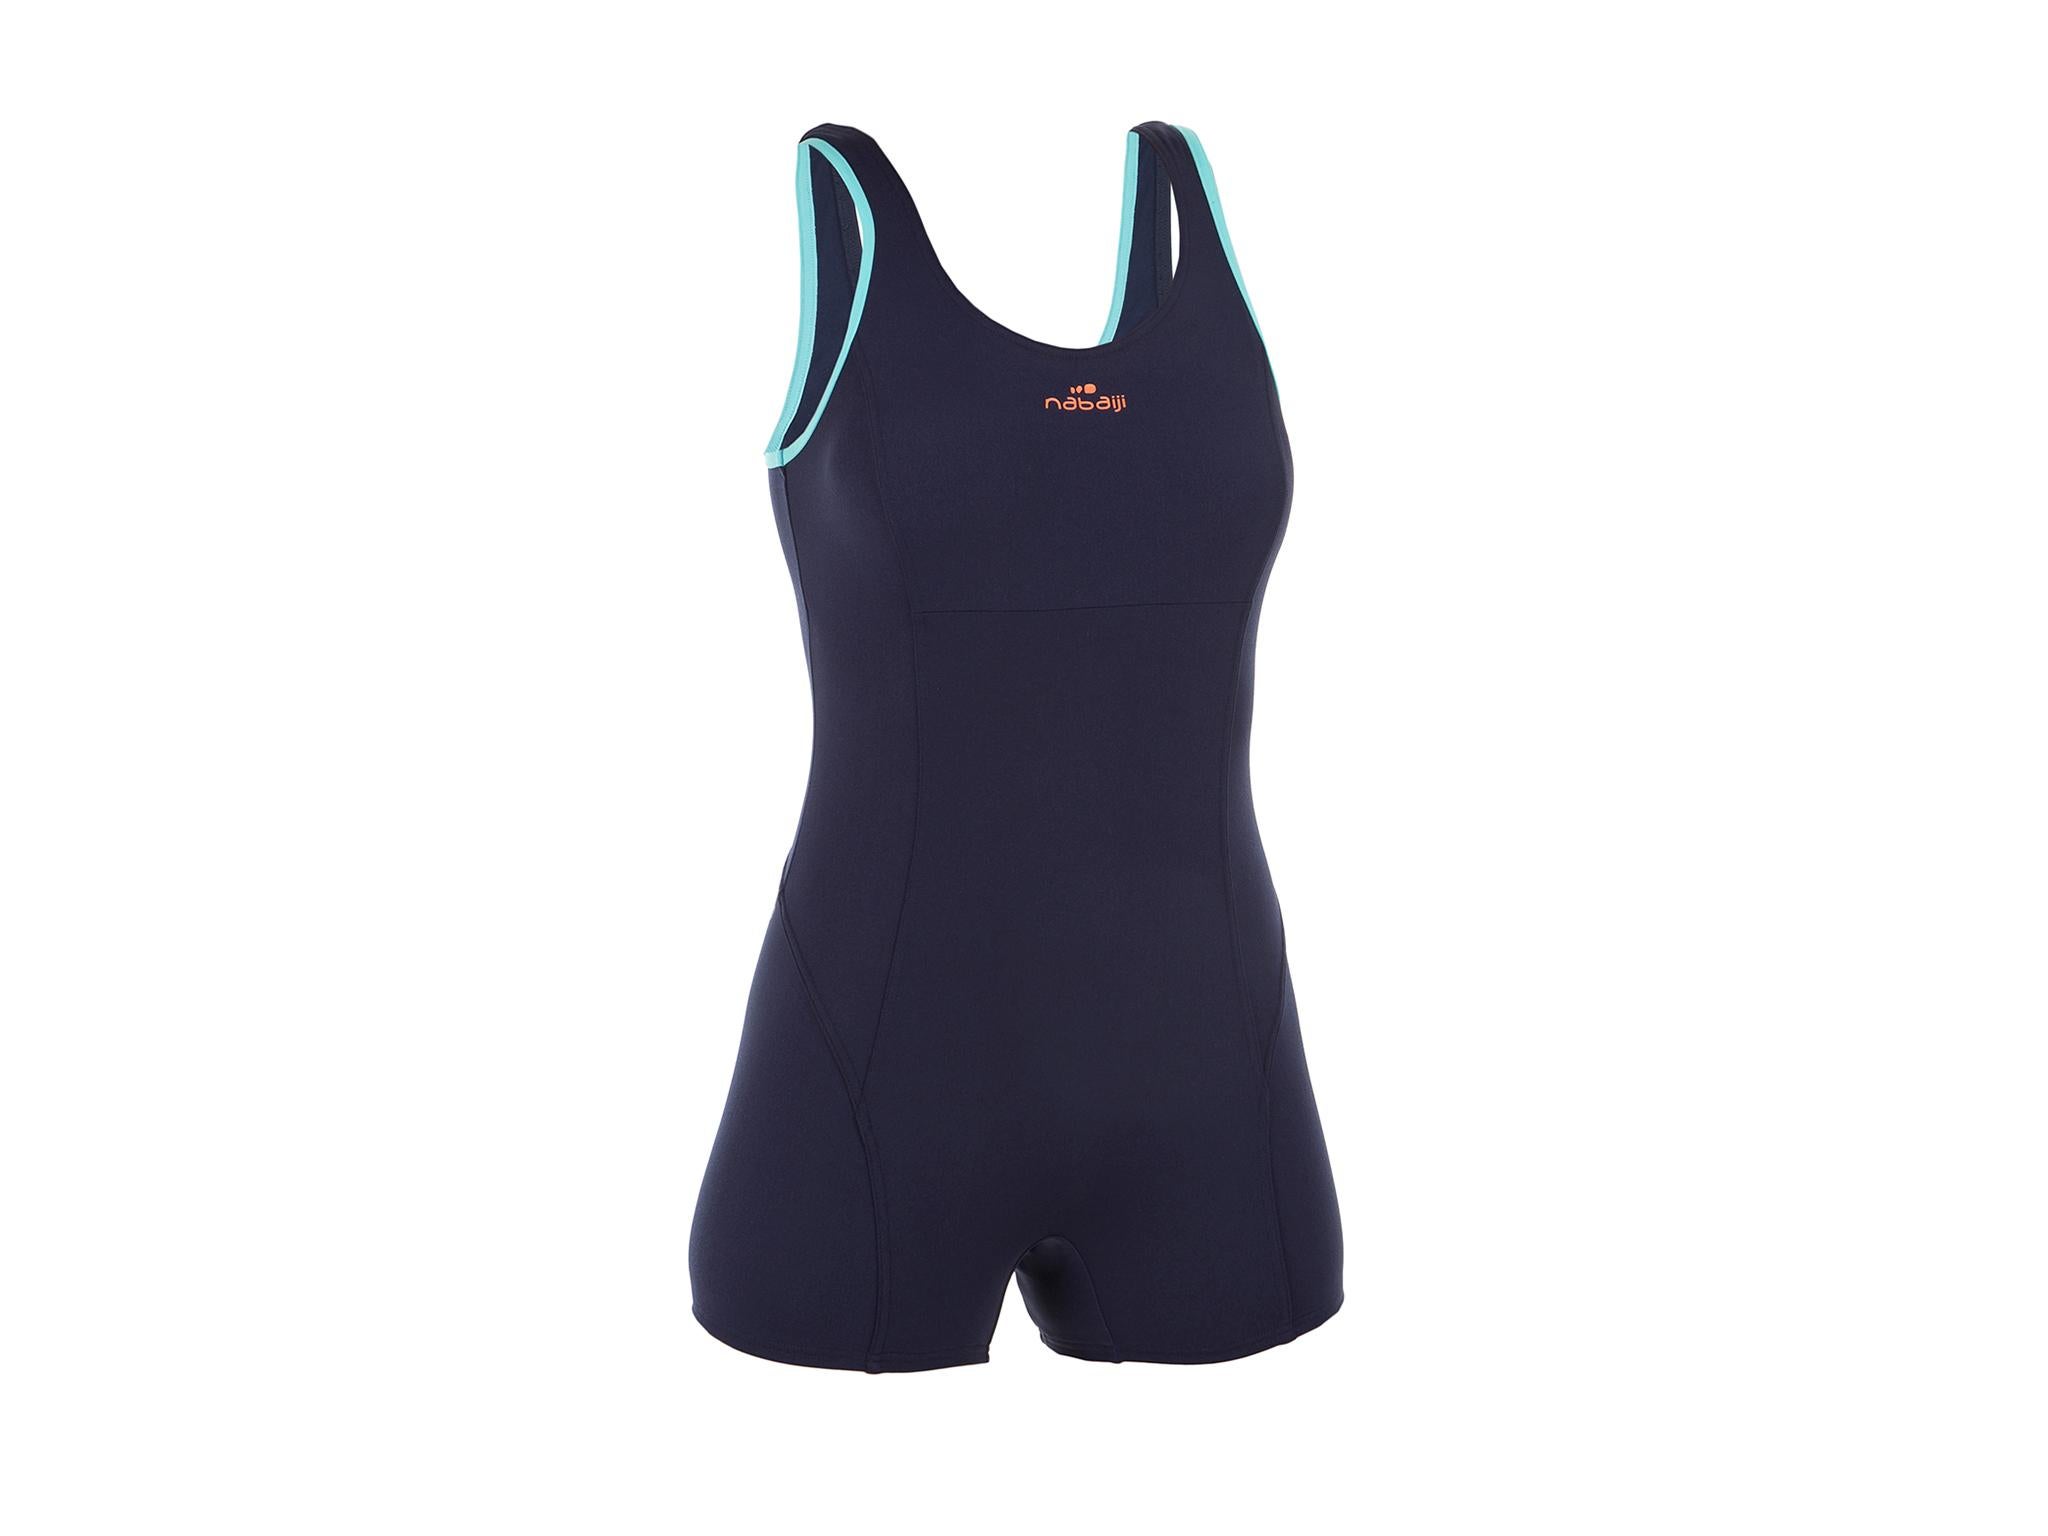 swimsuit for ladies decathlon